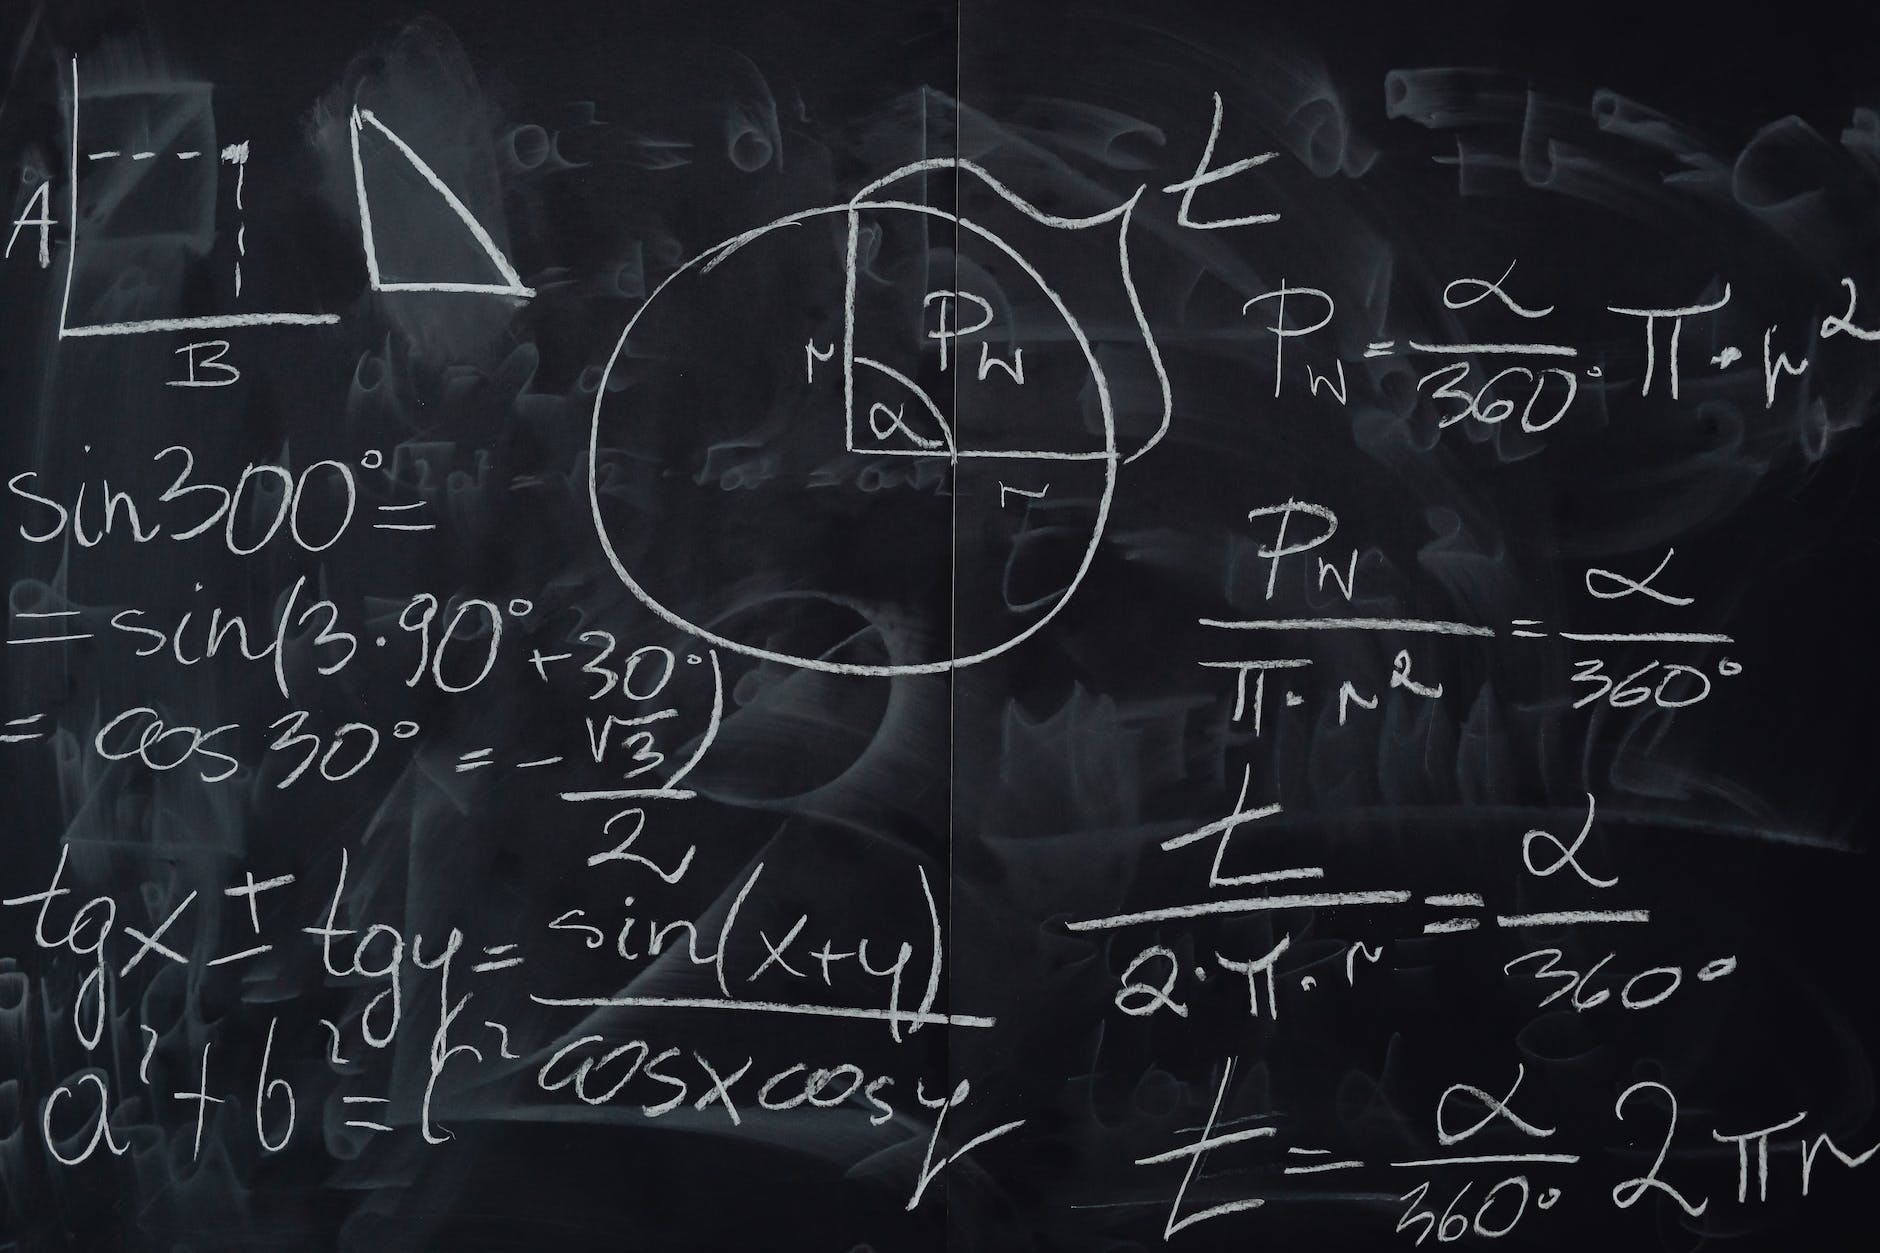 blackboard with handwritten calculations